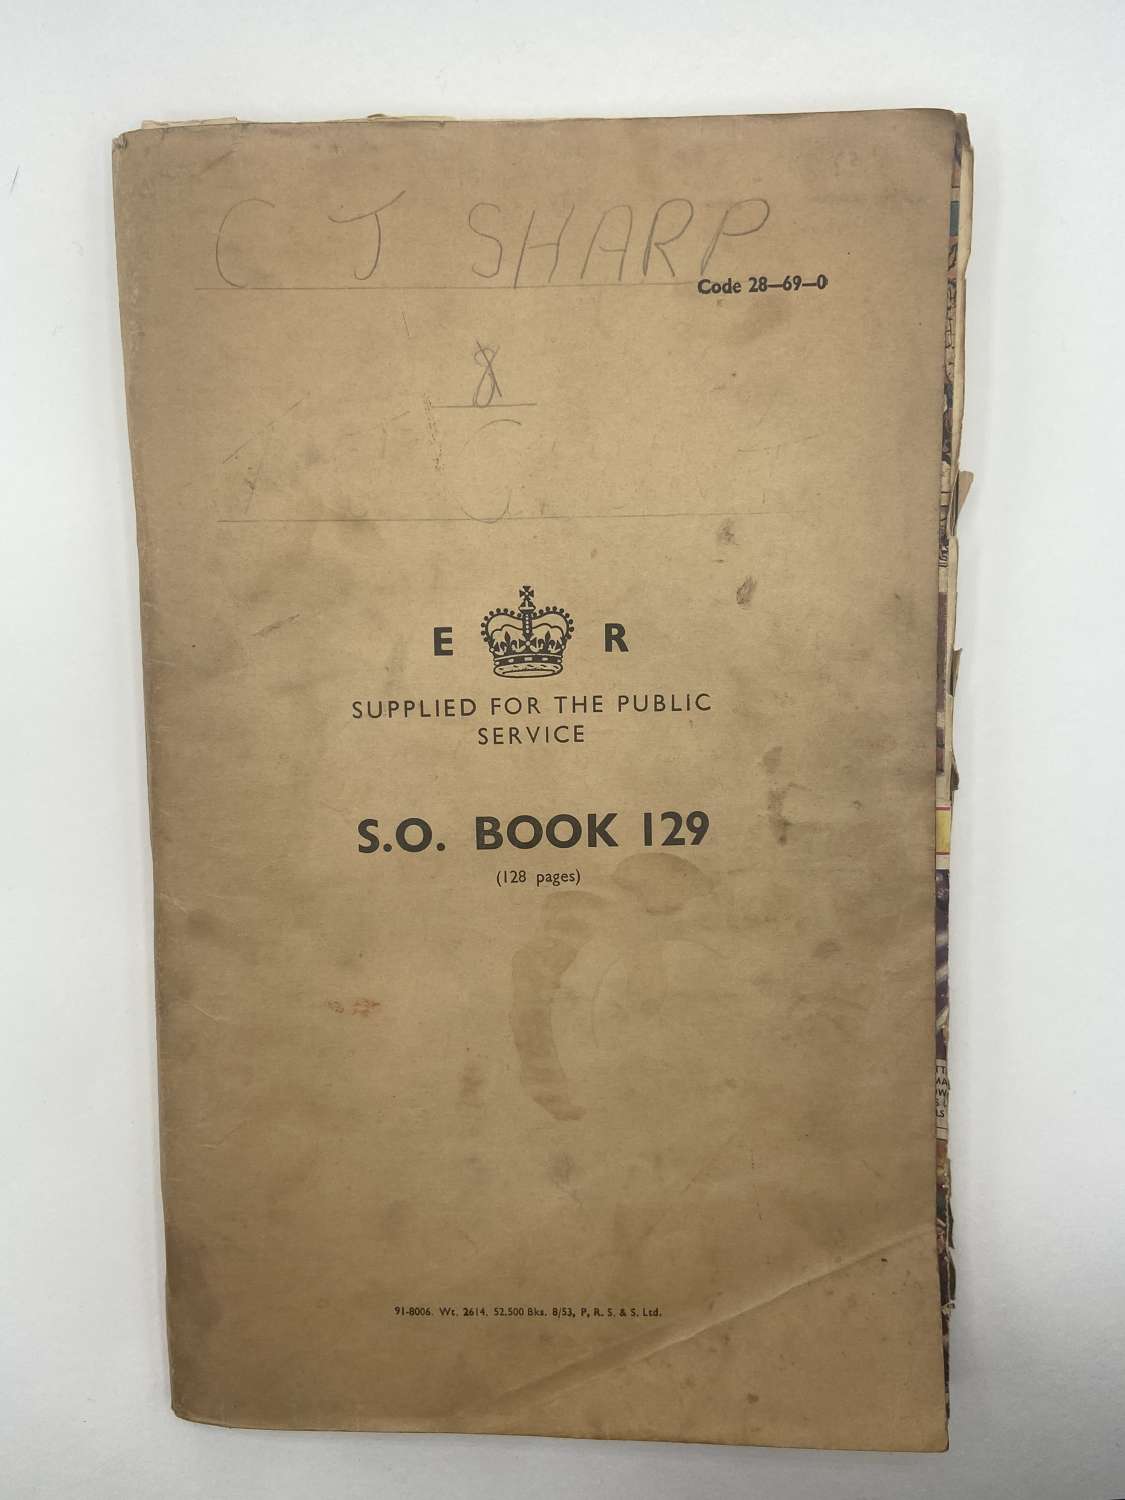 WW2 S.O Book British Army Scrap Book Supplies For Public Services